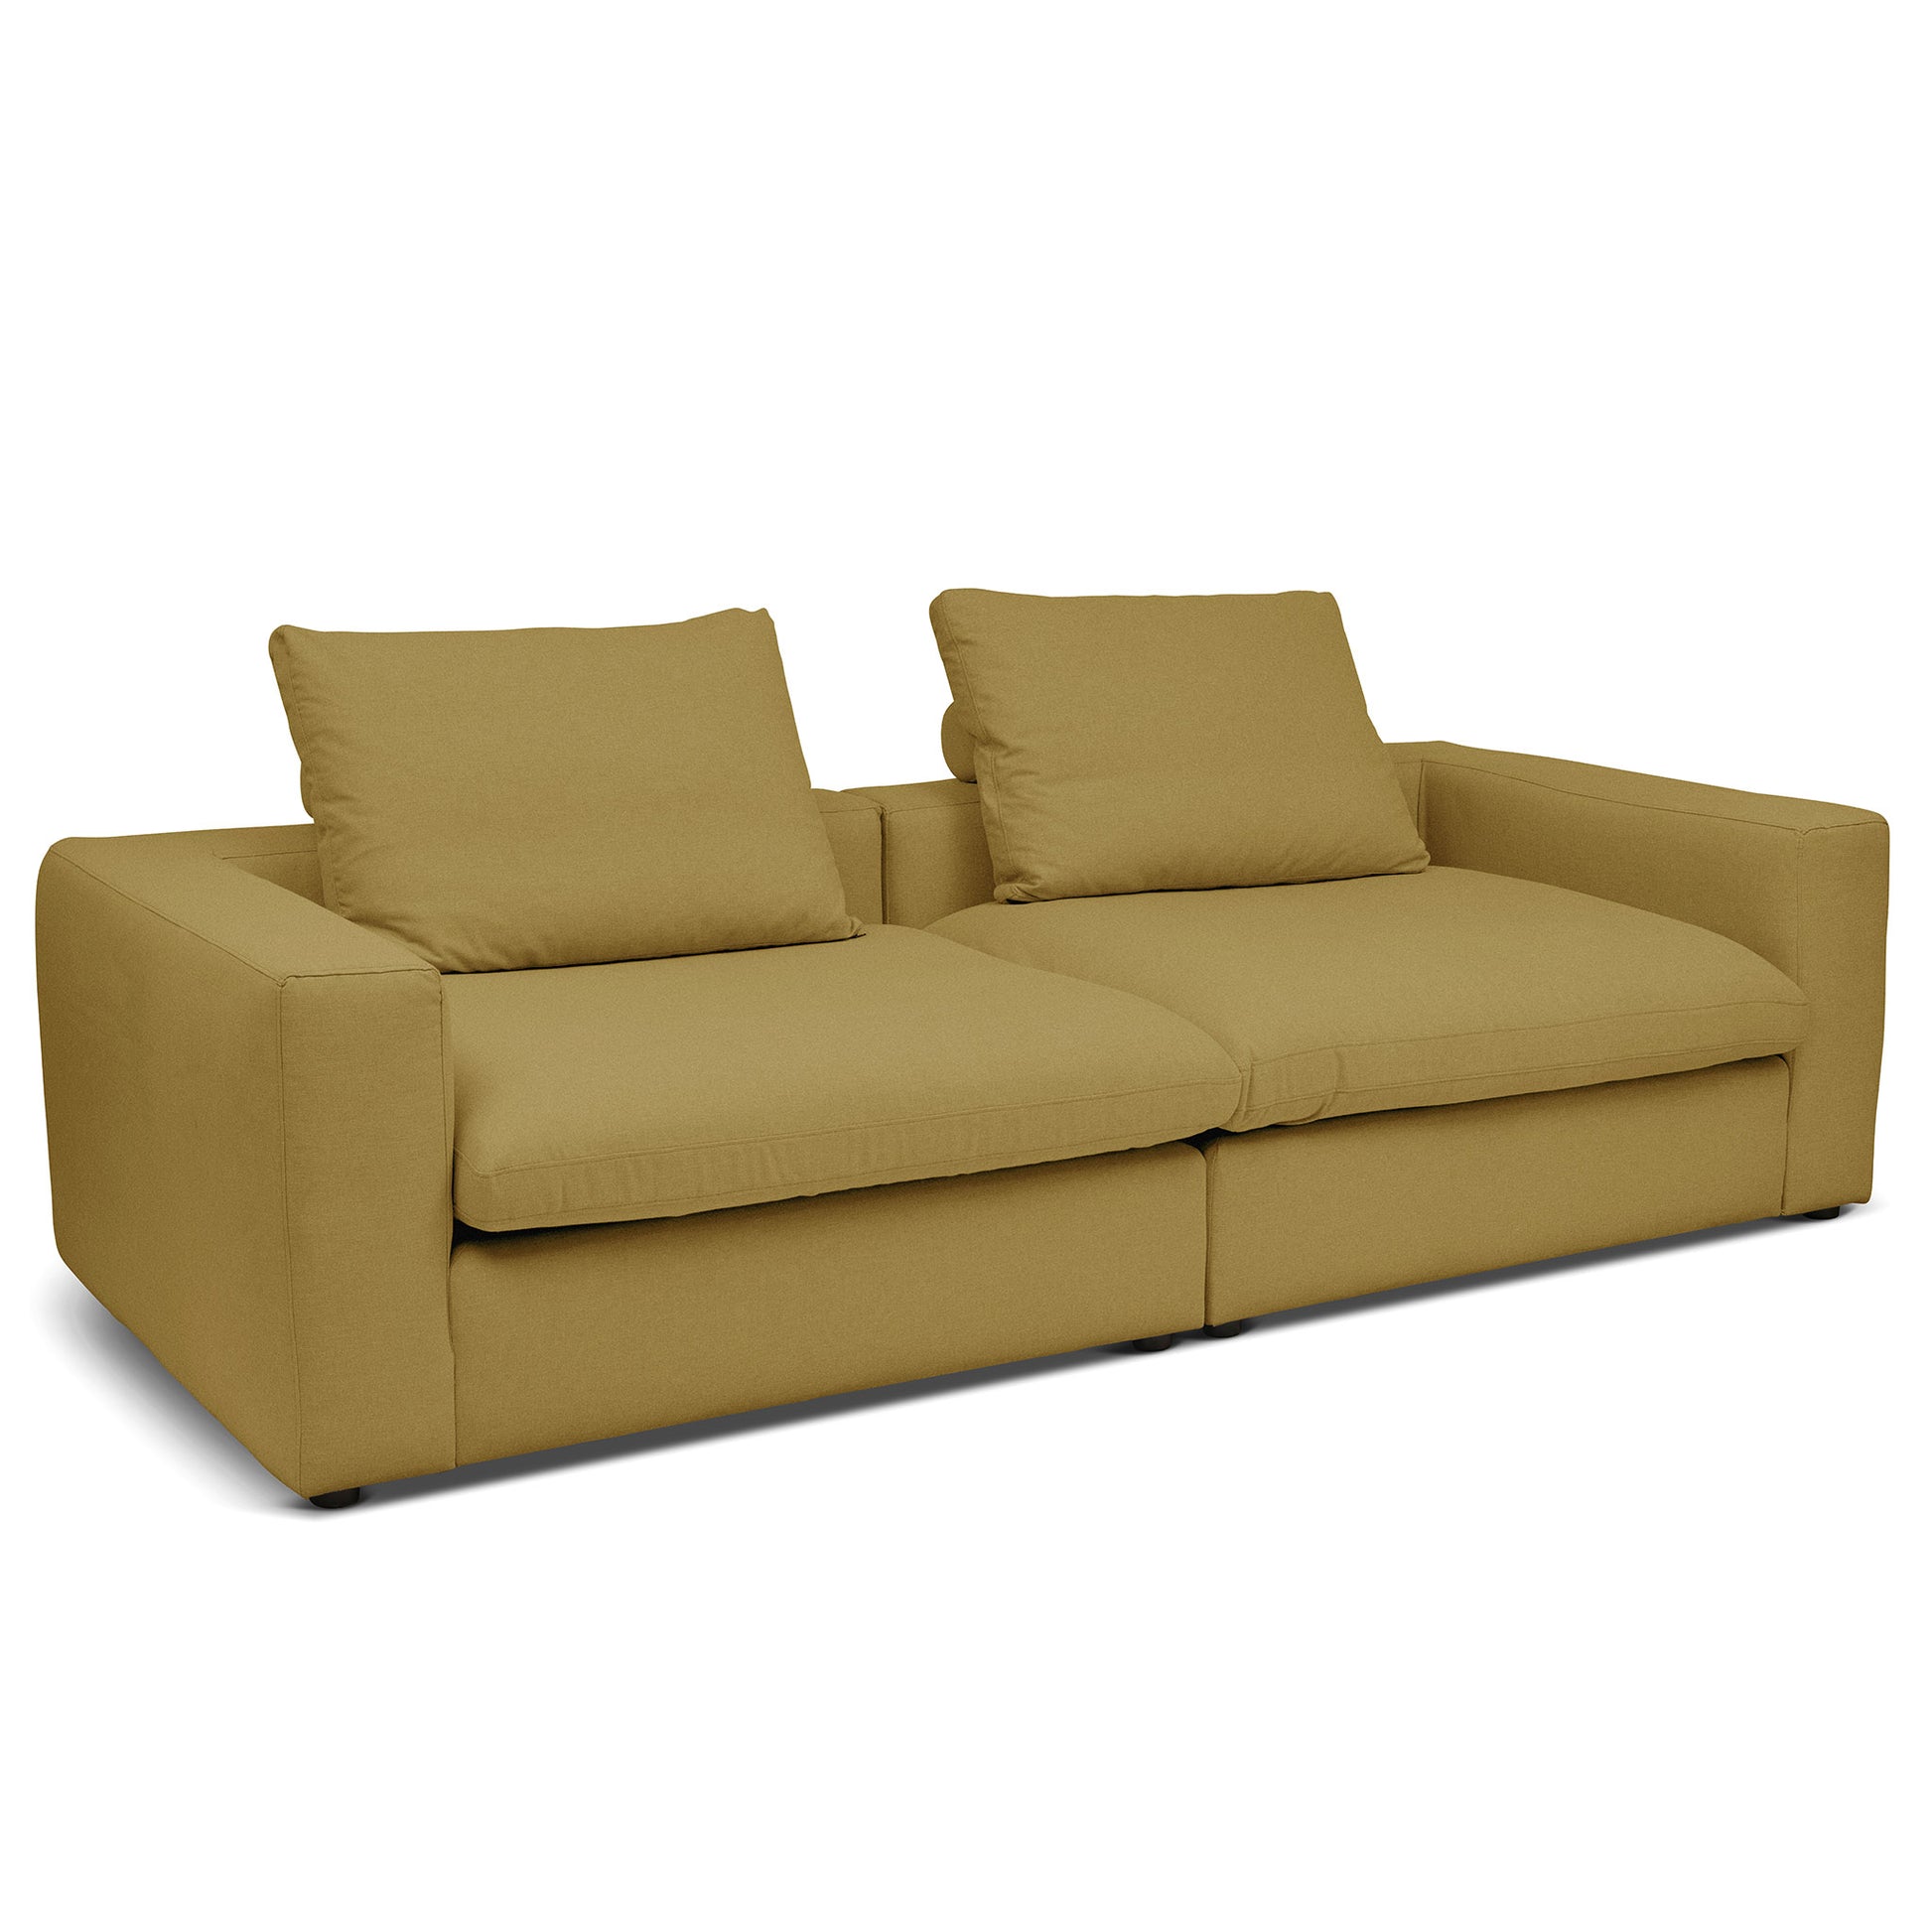 Extra djup 4-sits soffa i gul färg. Palazzo är en byggbar modulsoffa